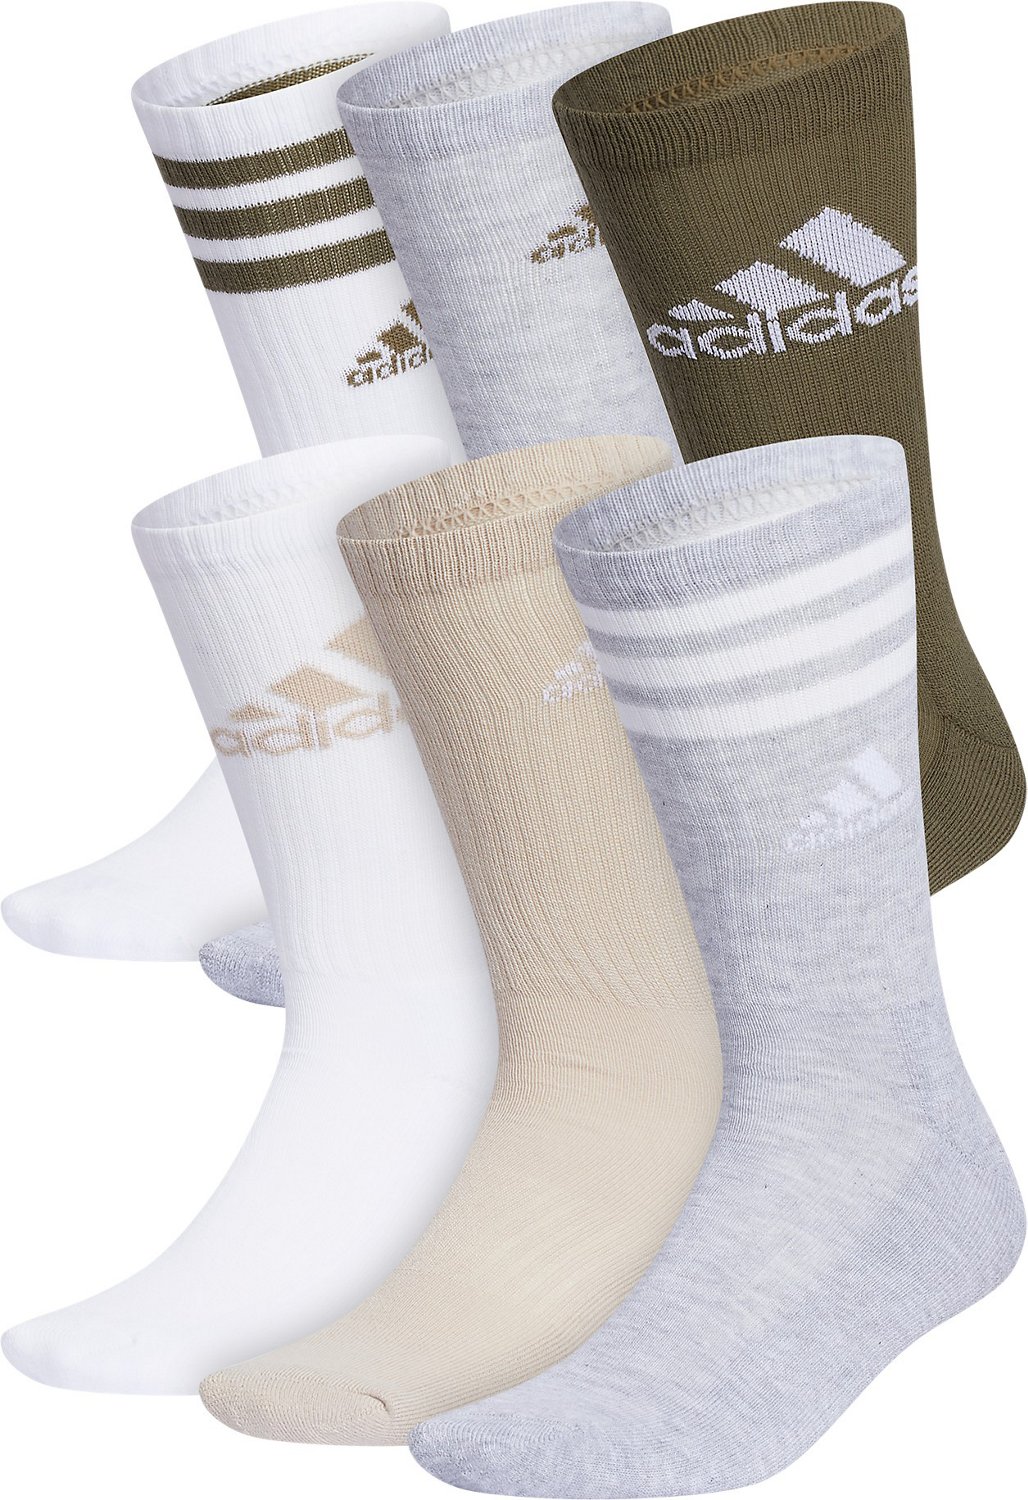 adidas Cushion Mixed Crew Socks 6 Pack | Academy